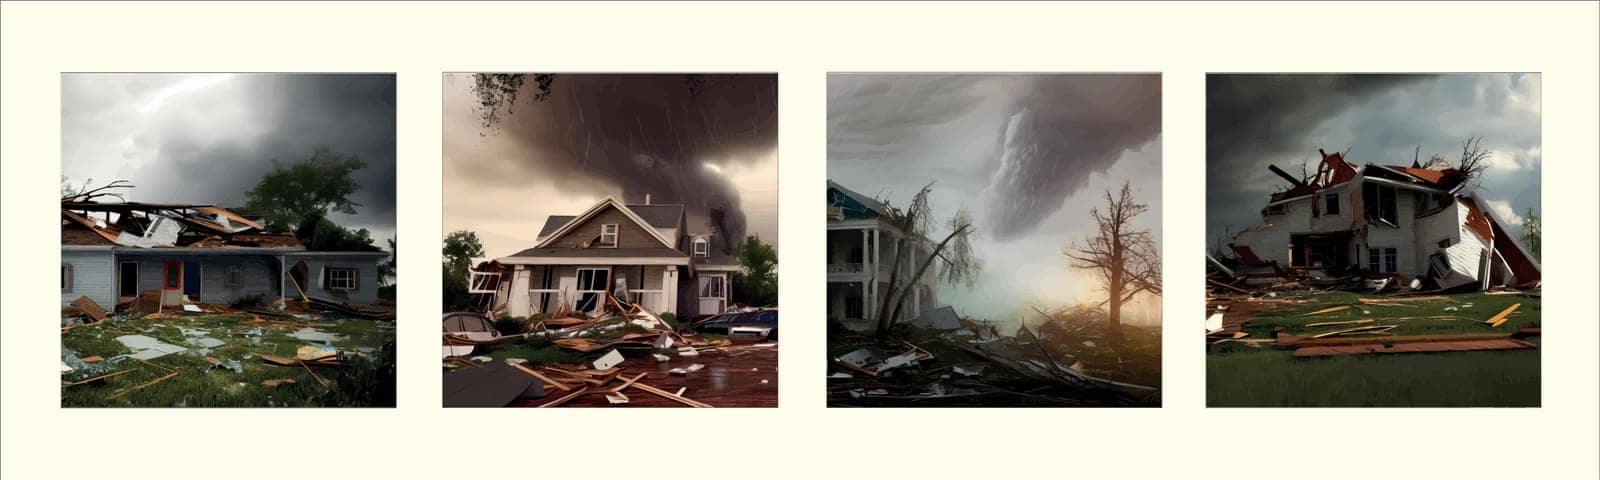 Twisting tornado, destroying civilian building. Hurricane Storm in countryside. by EkaterinaPereslavtseva